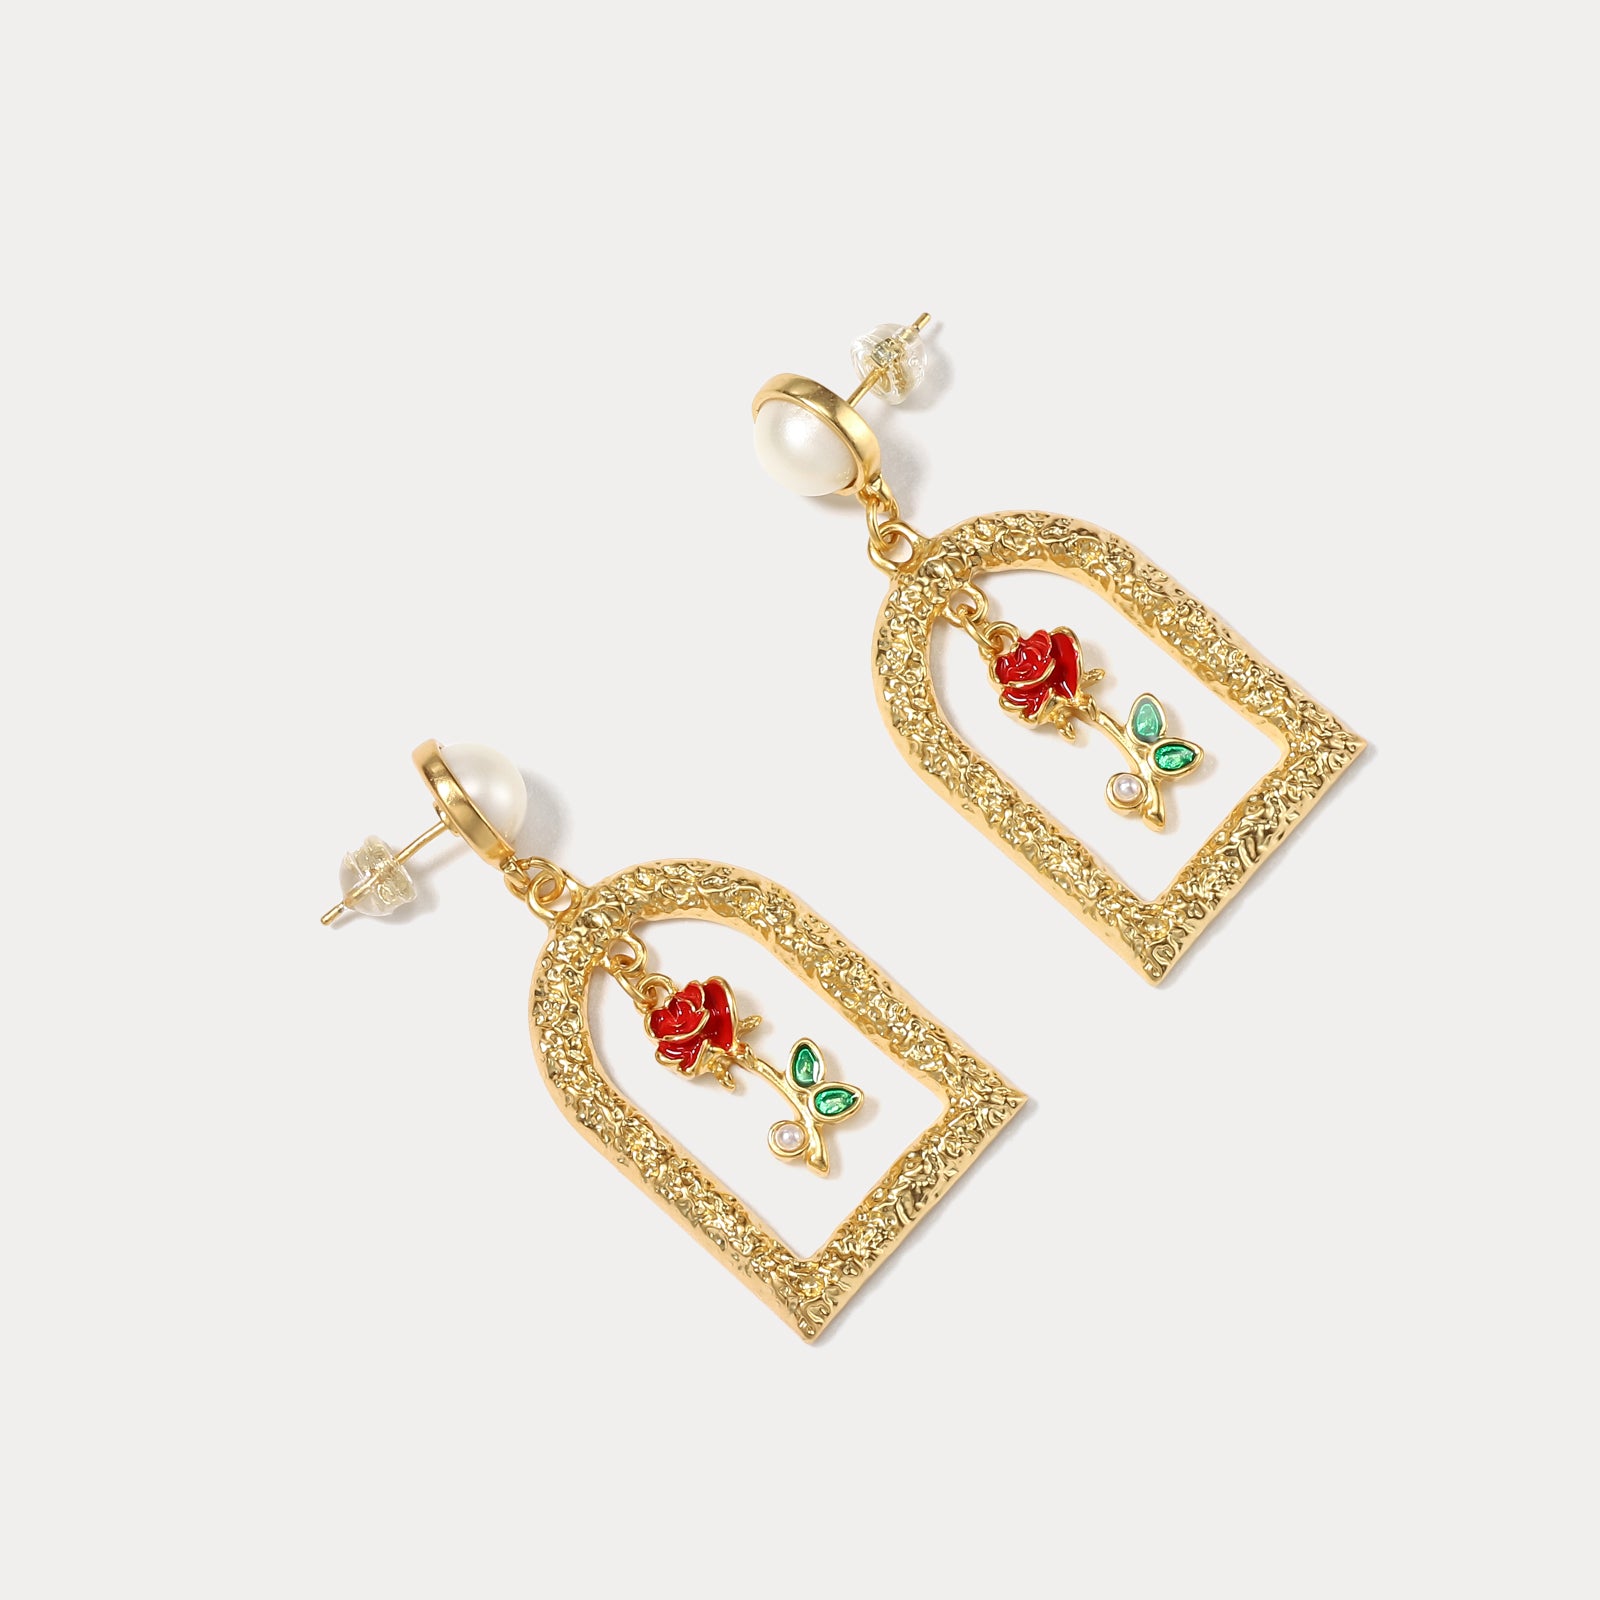 Vintage Garden Rose Dangling Earrings Gift Ideas for Women